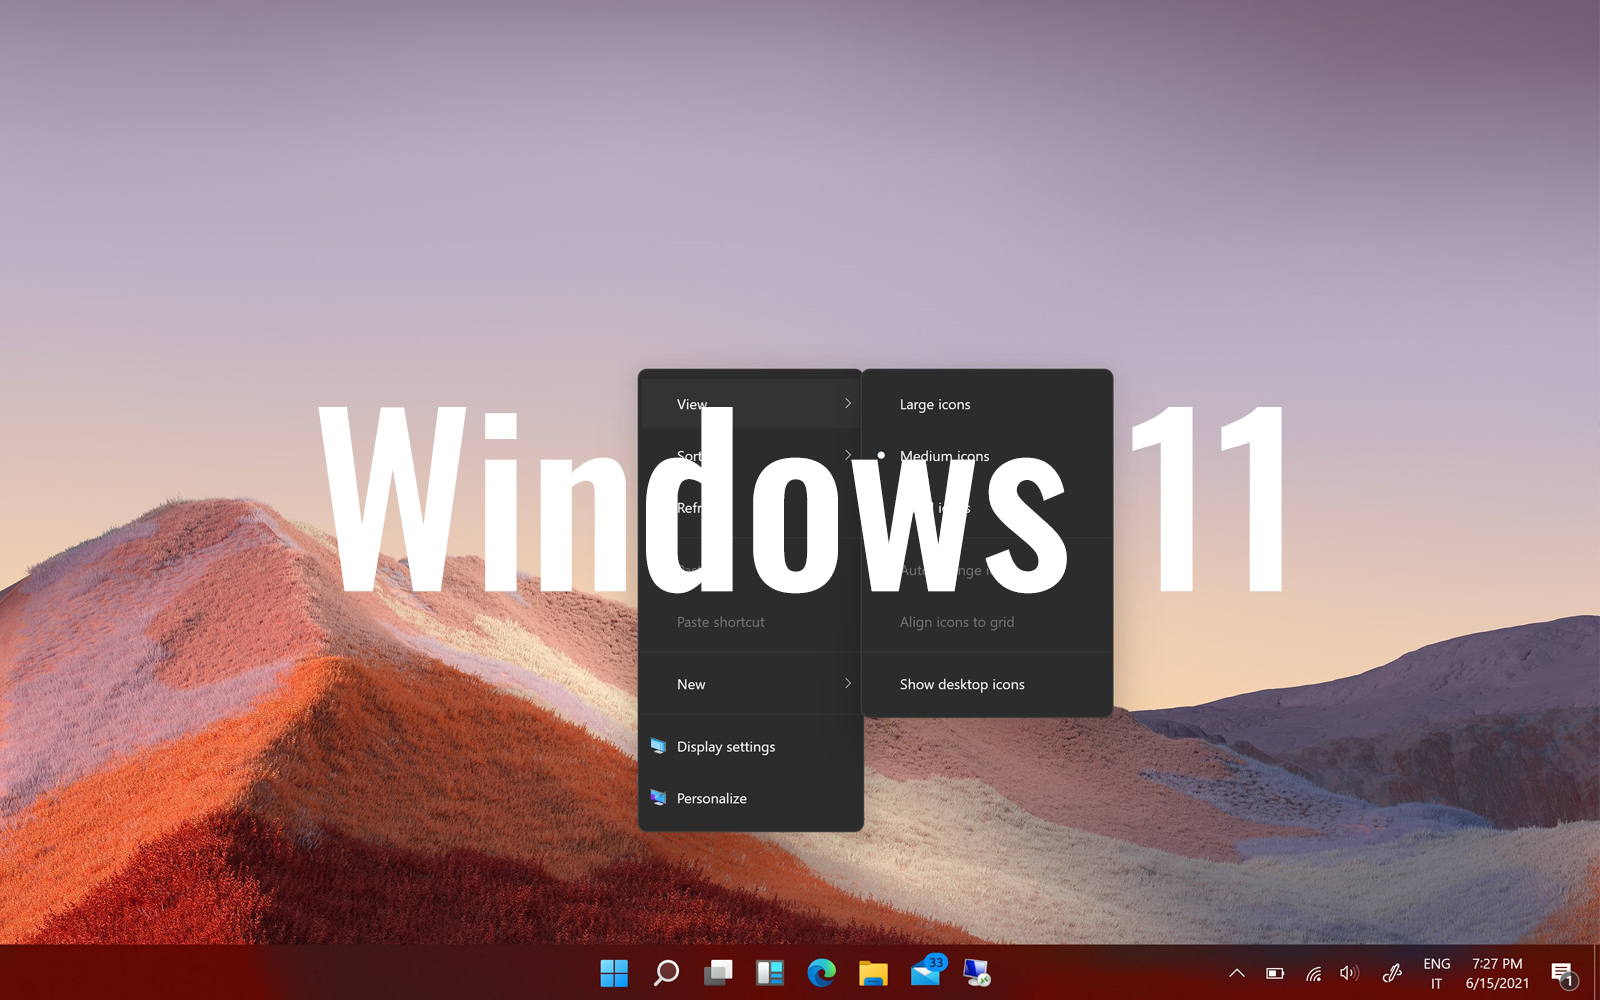 windows 11 iso file download free full version